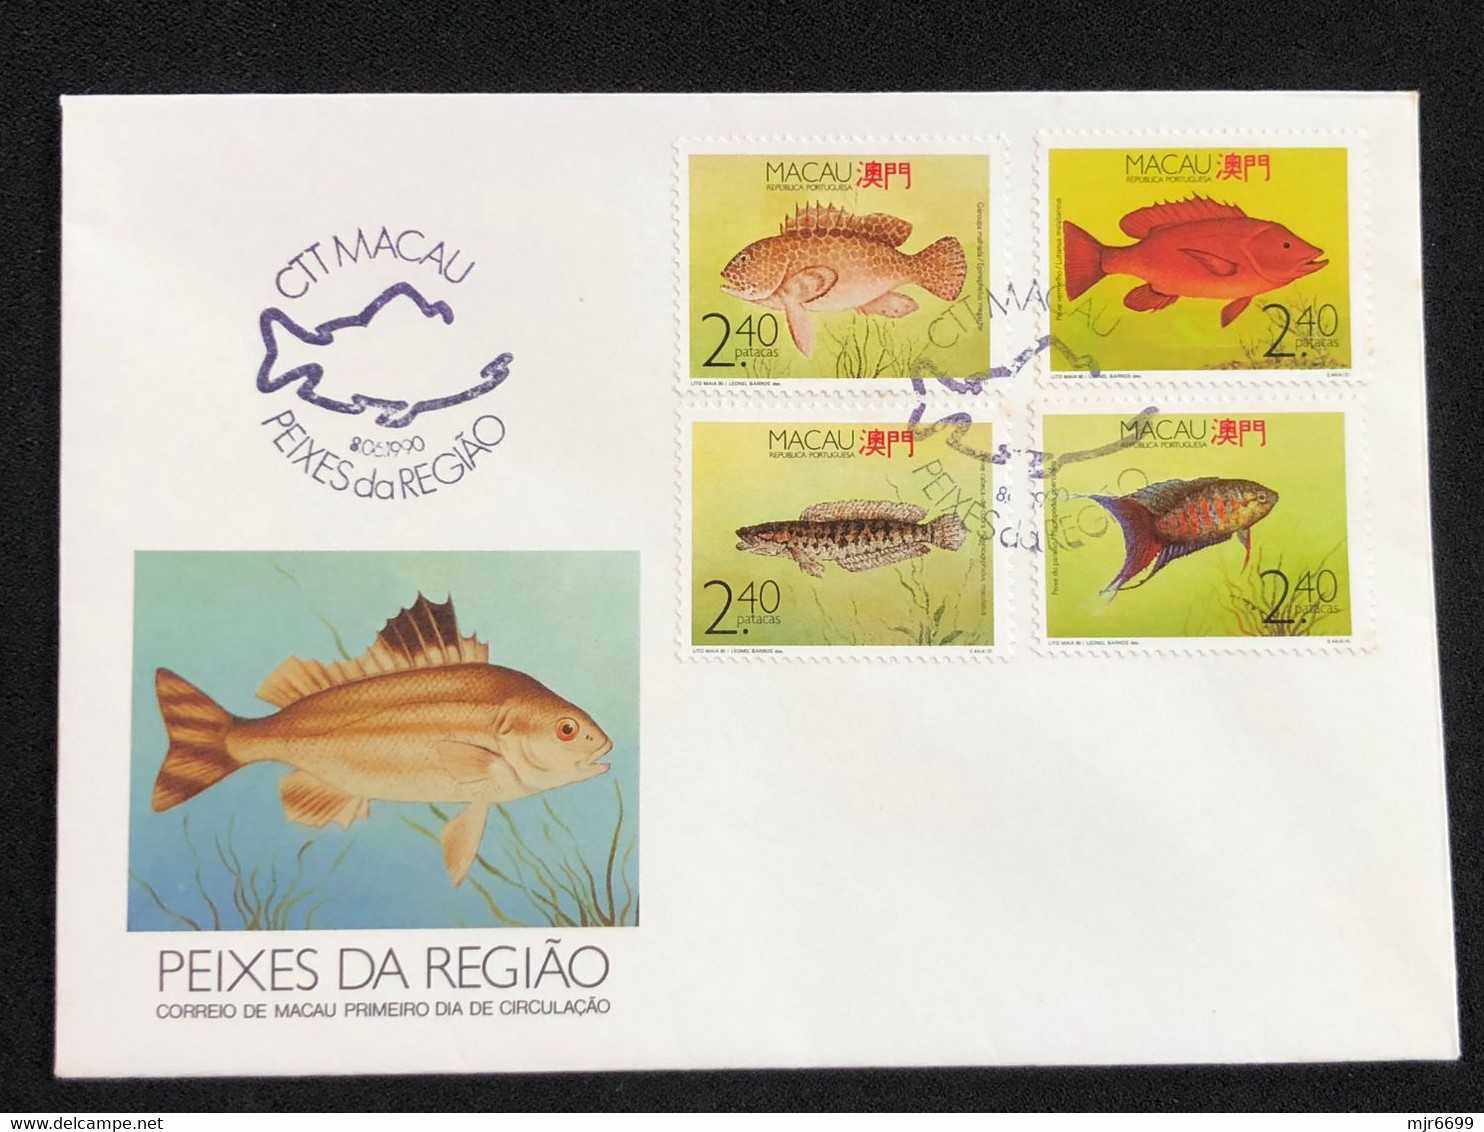 MACAU 1990 FISHES OF THE REGION FDC - FDC